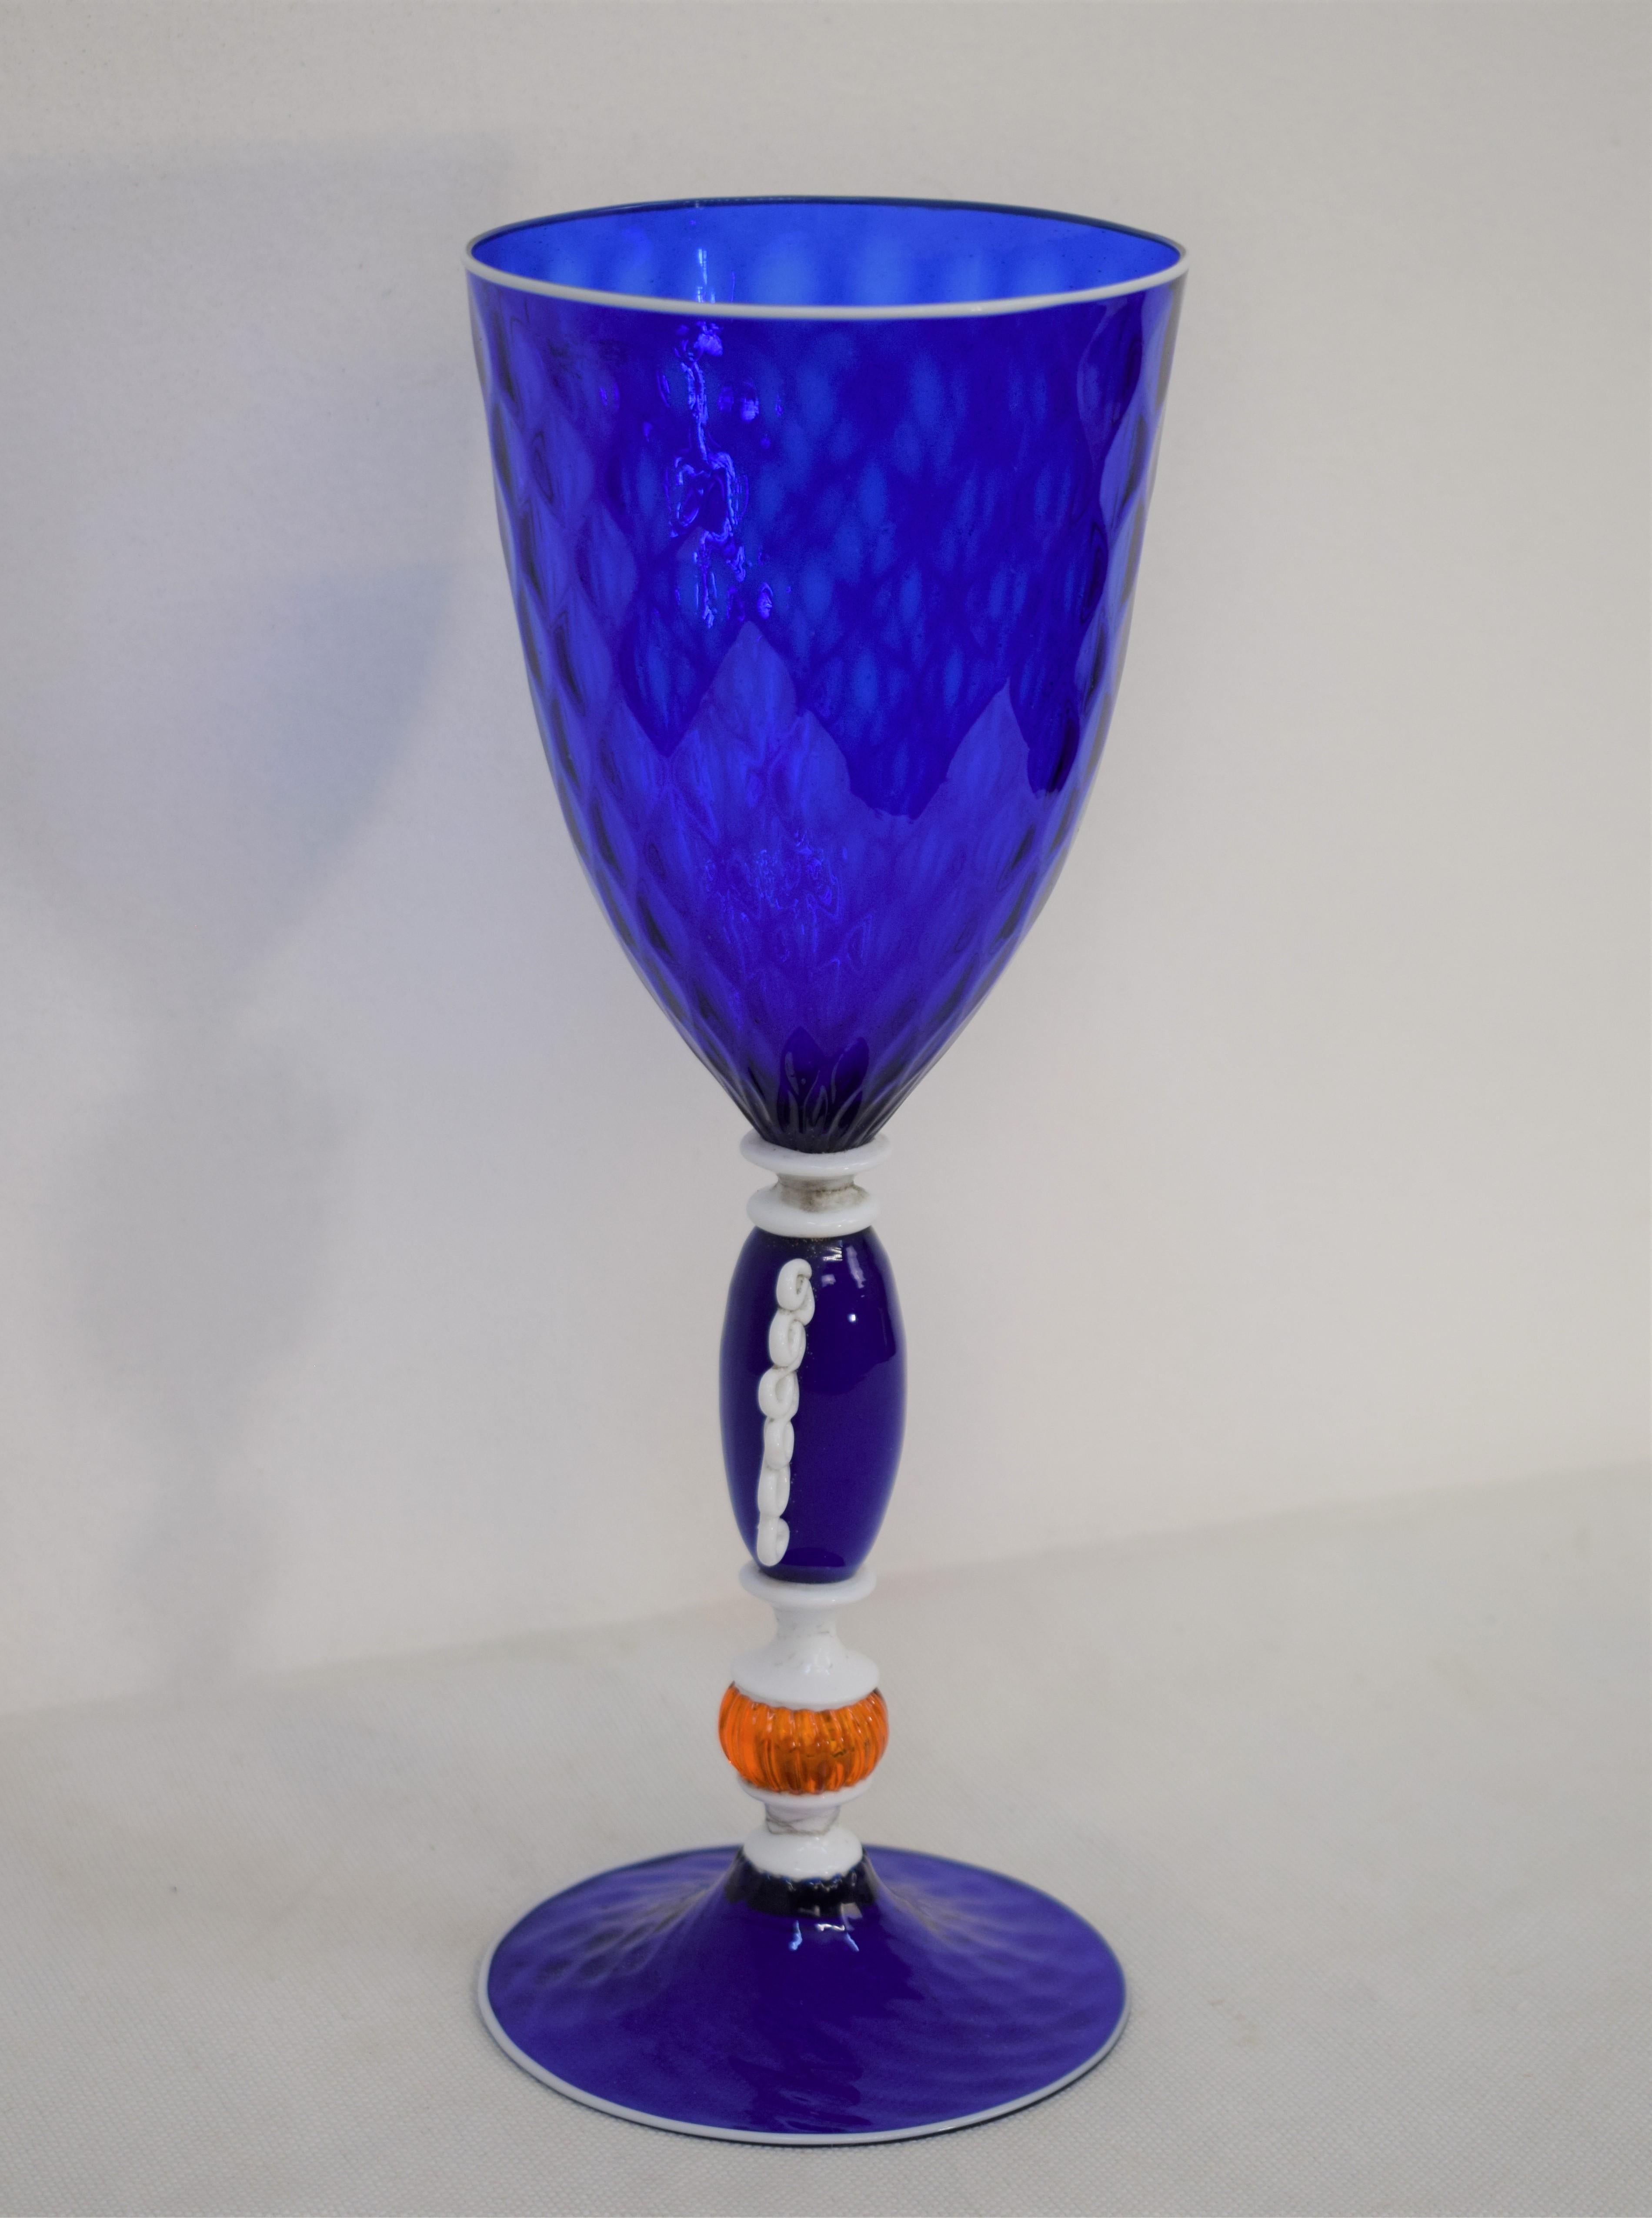 Murano glass globet, 1930s.

Dimensions: H= 25 cm; D= 9 cm.